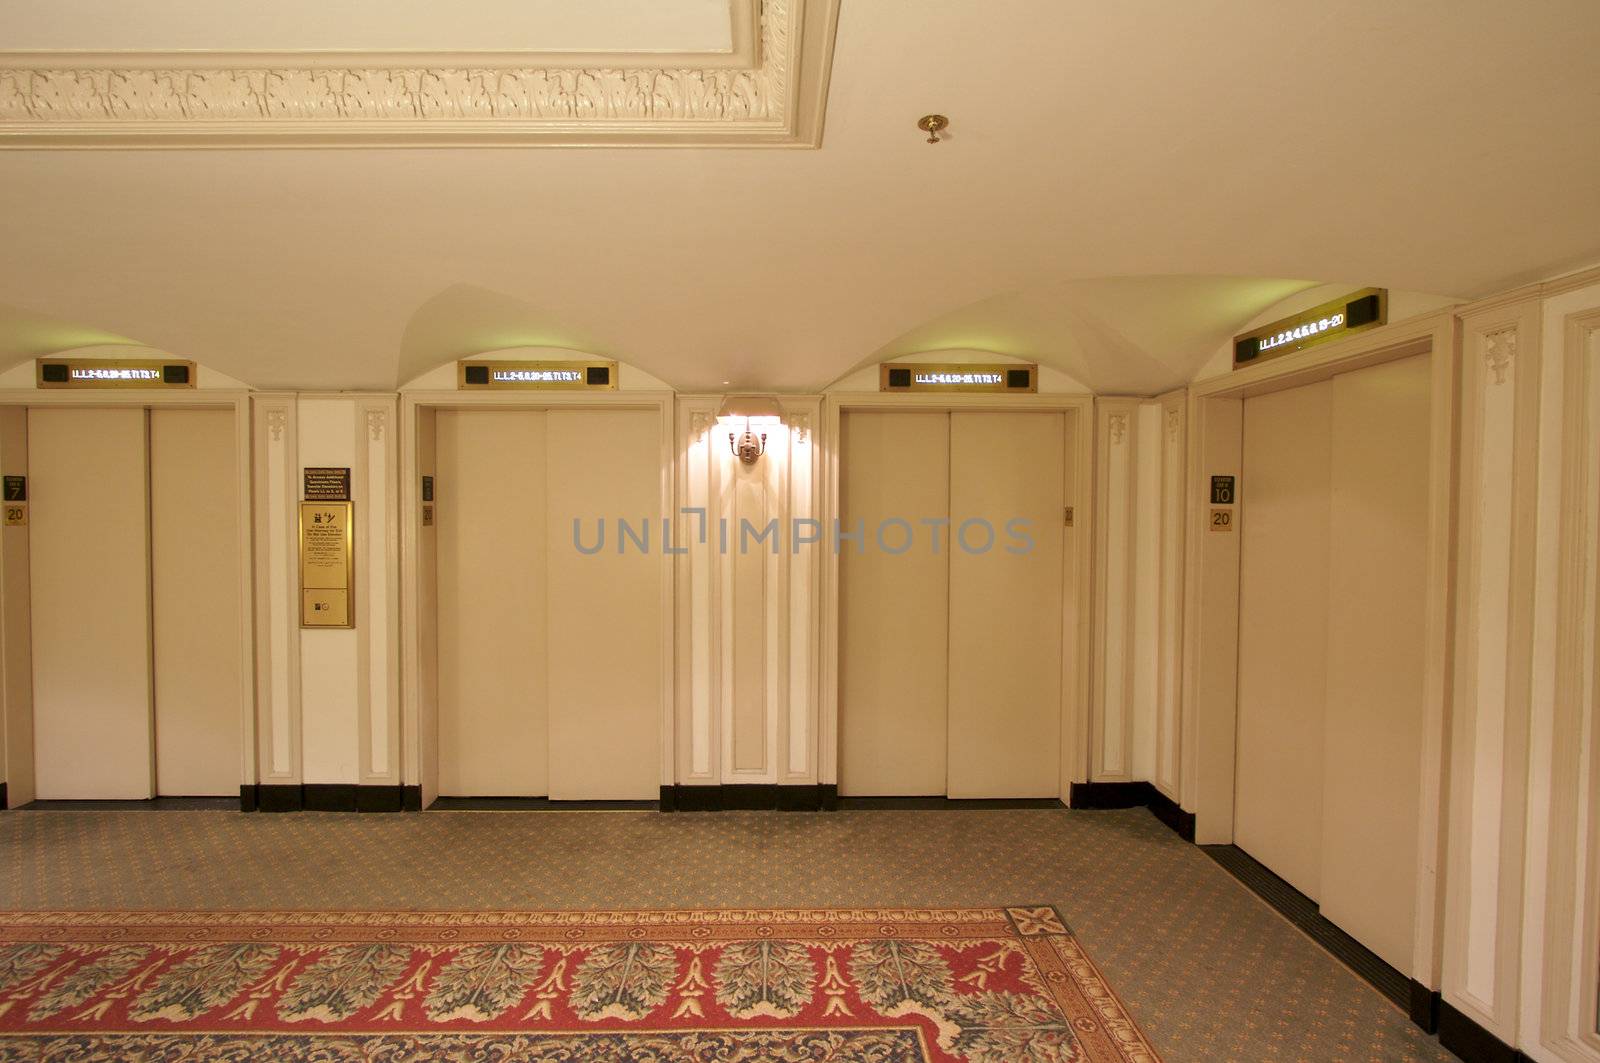 Classic Elevator Lobby Interior of a Hotel